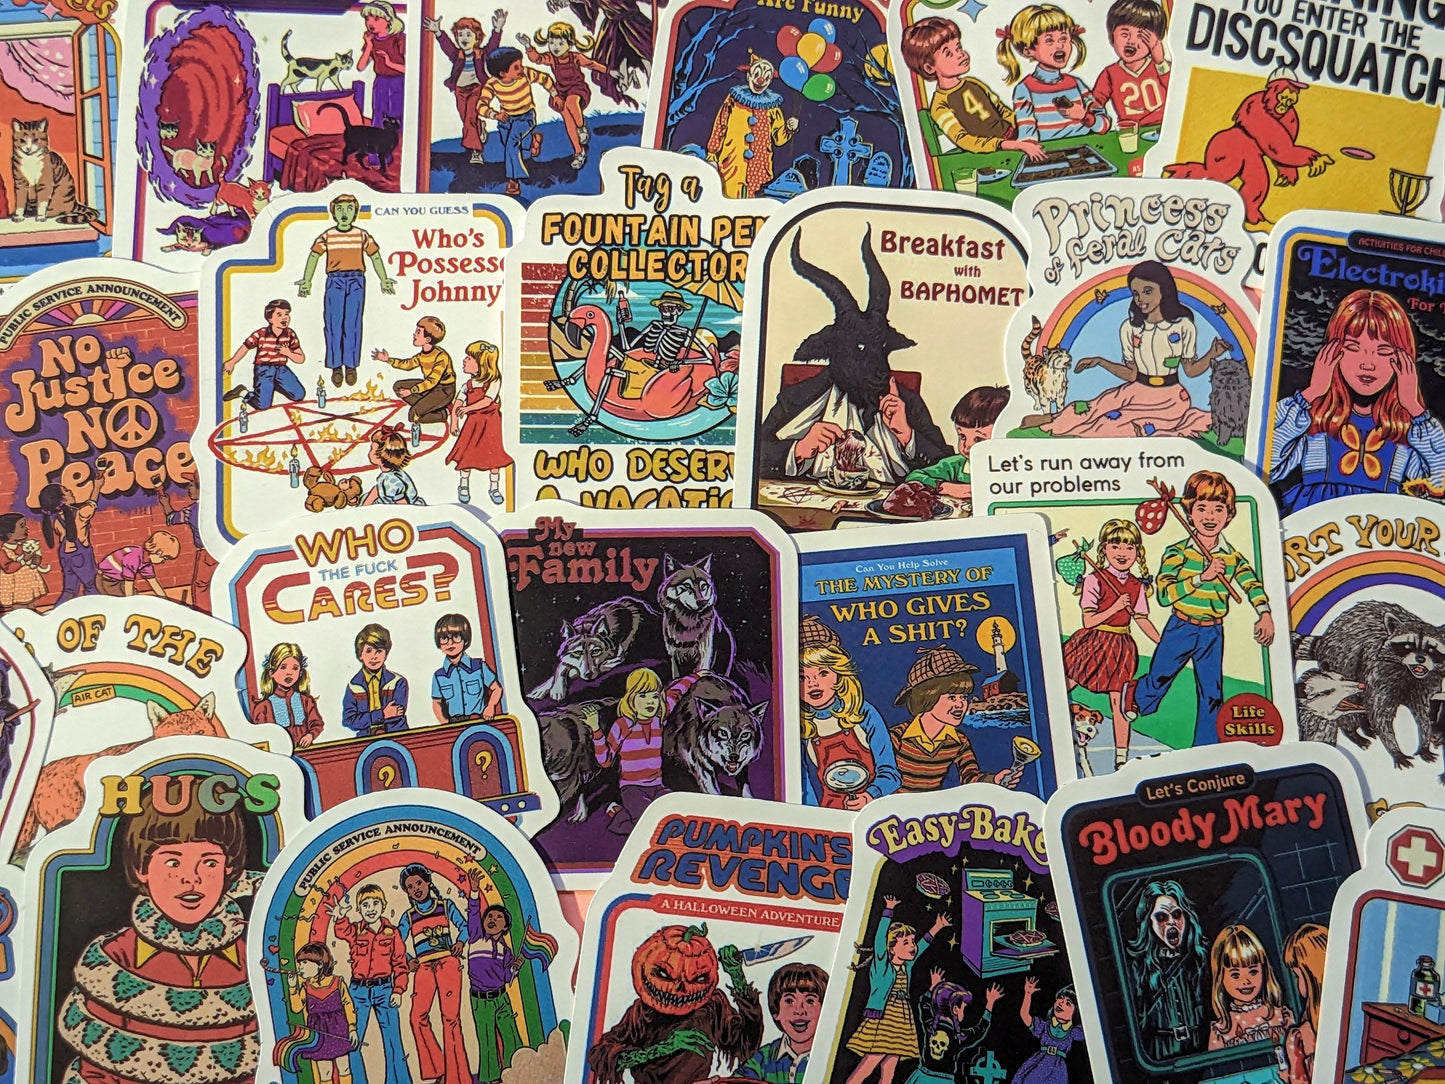 Satan/Satire/Horror Sticker Set - Vintage Style Funny Parody Decal Stickers, Retro Throwback Artwork, Halloween, Spooky Vibes, Horror Movies - Asylum Books